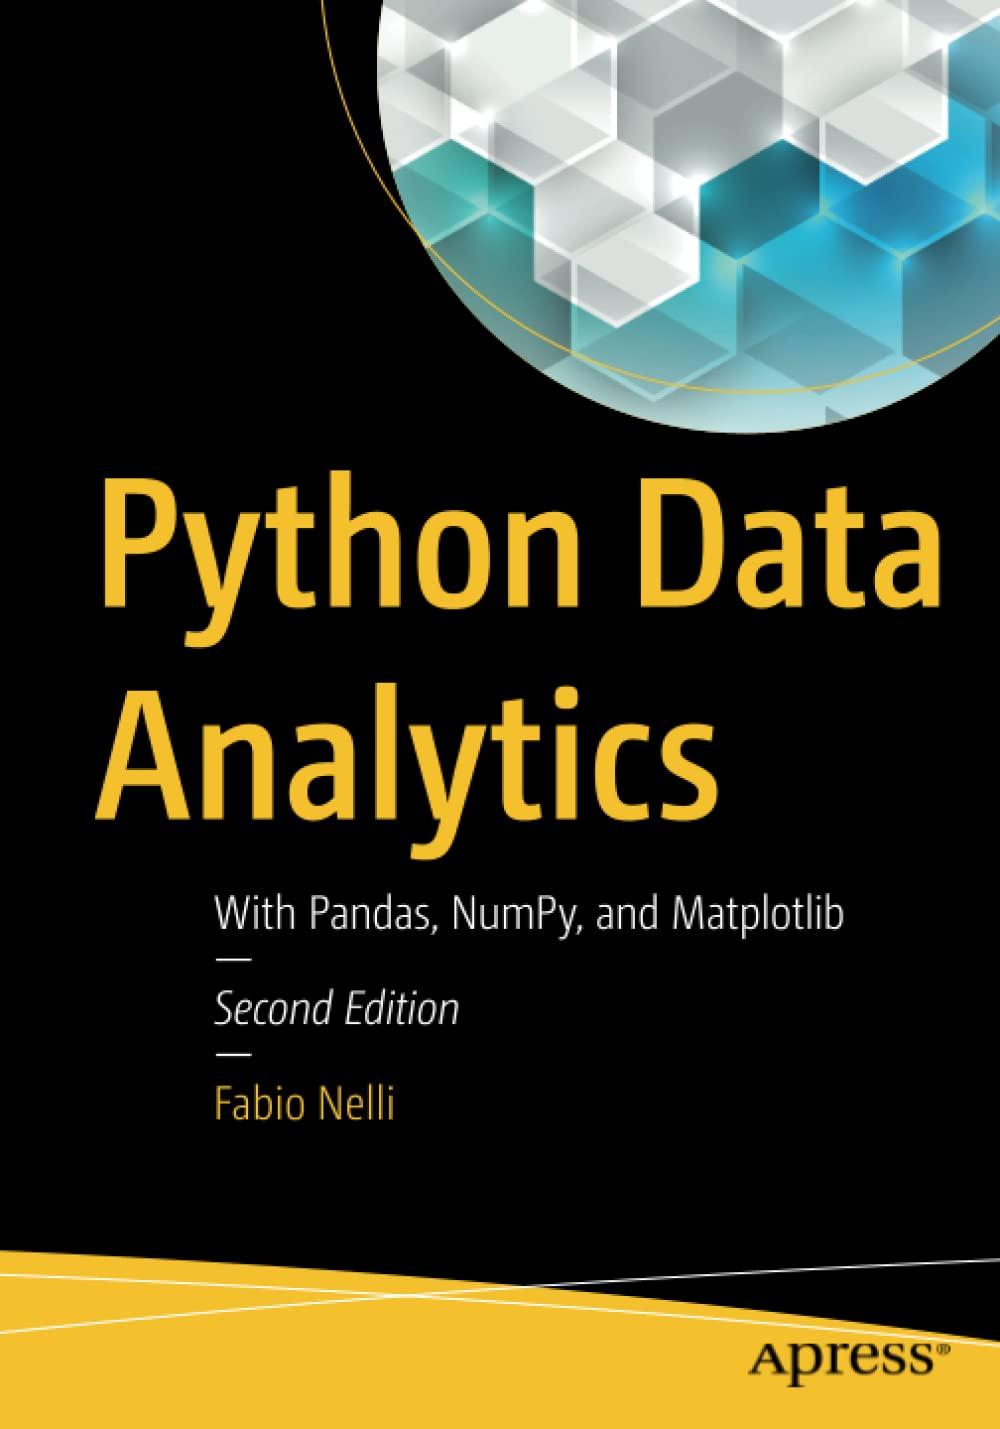 python data analytics with pandas numpy and matplotlib 2nd edition fabio nelli 1484239121, 978-1484239124